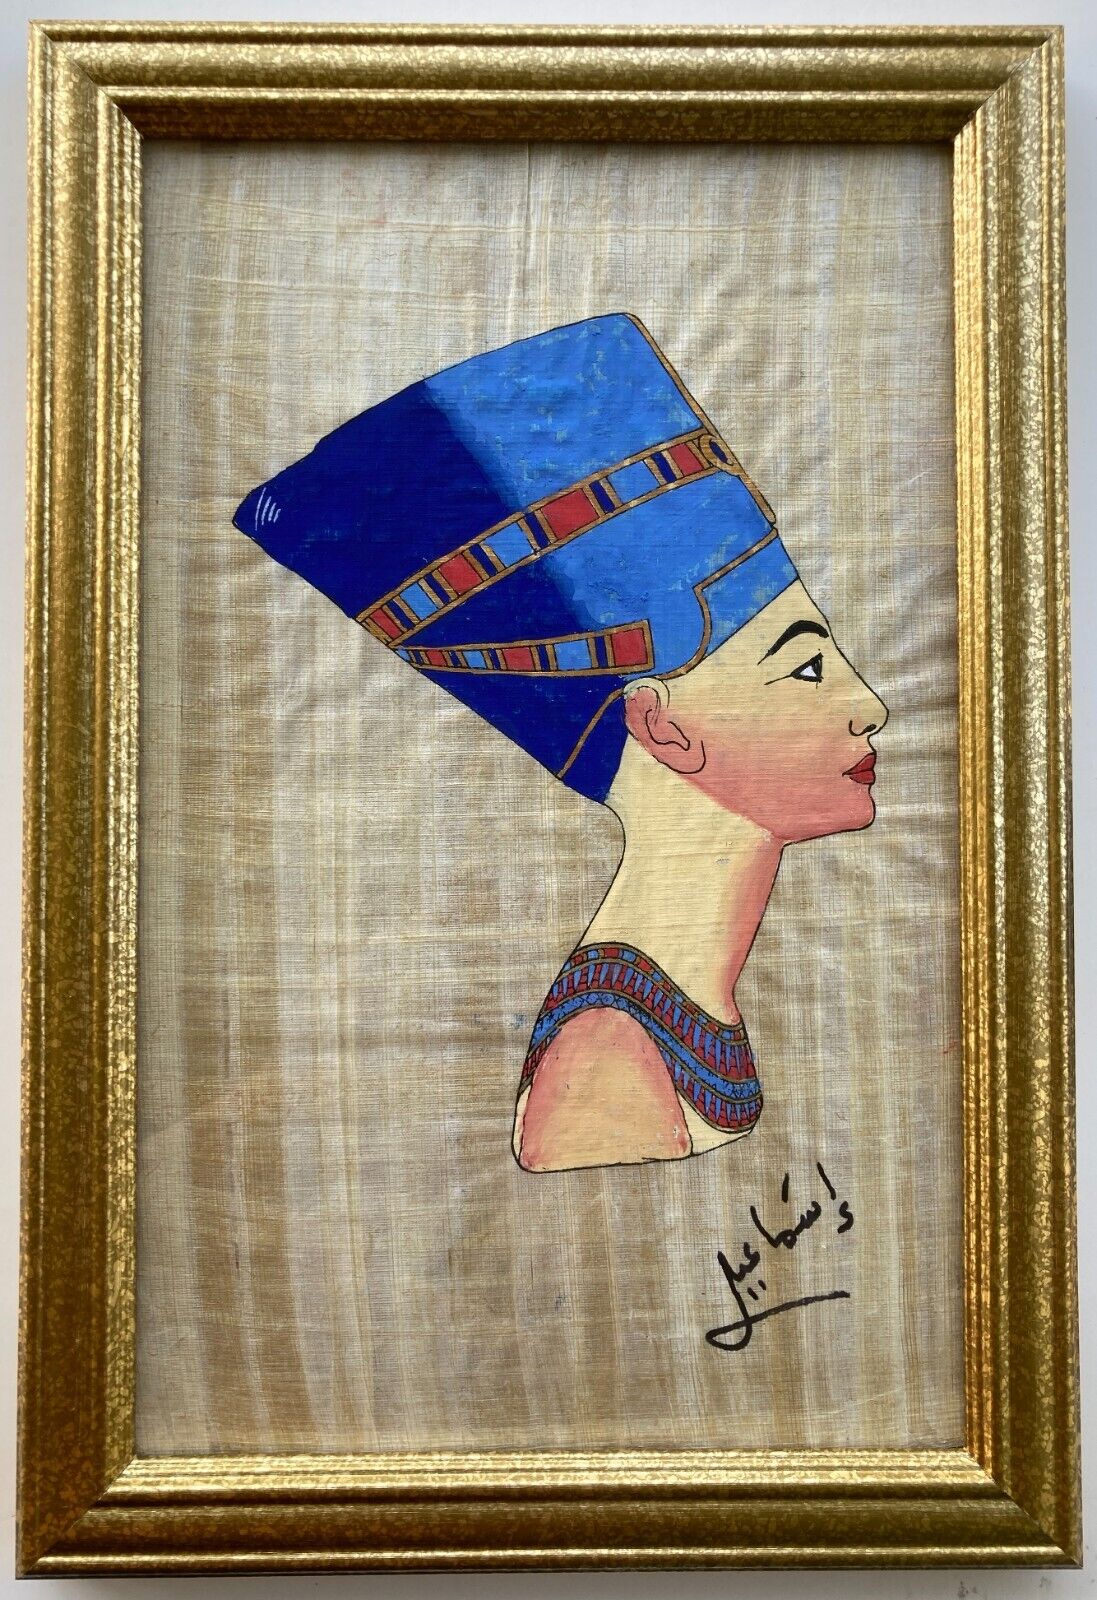 Papyrus Painting of Nefertiti in an Elegant Golden Frame